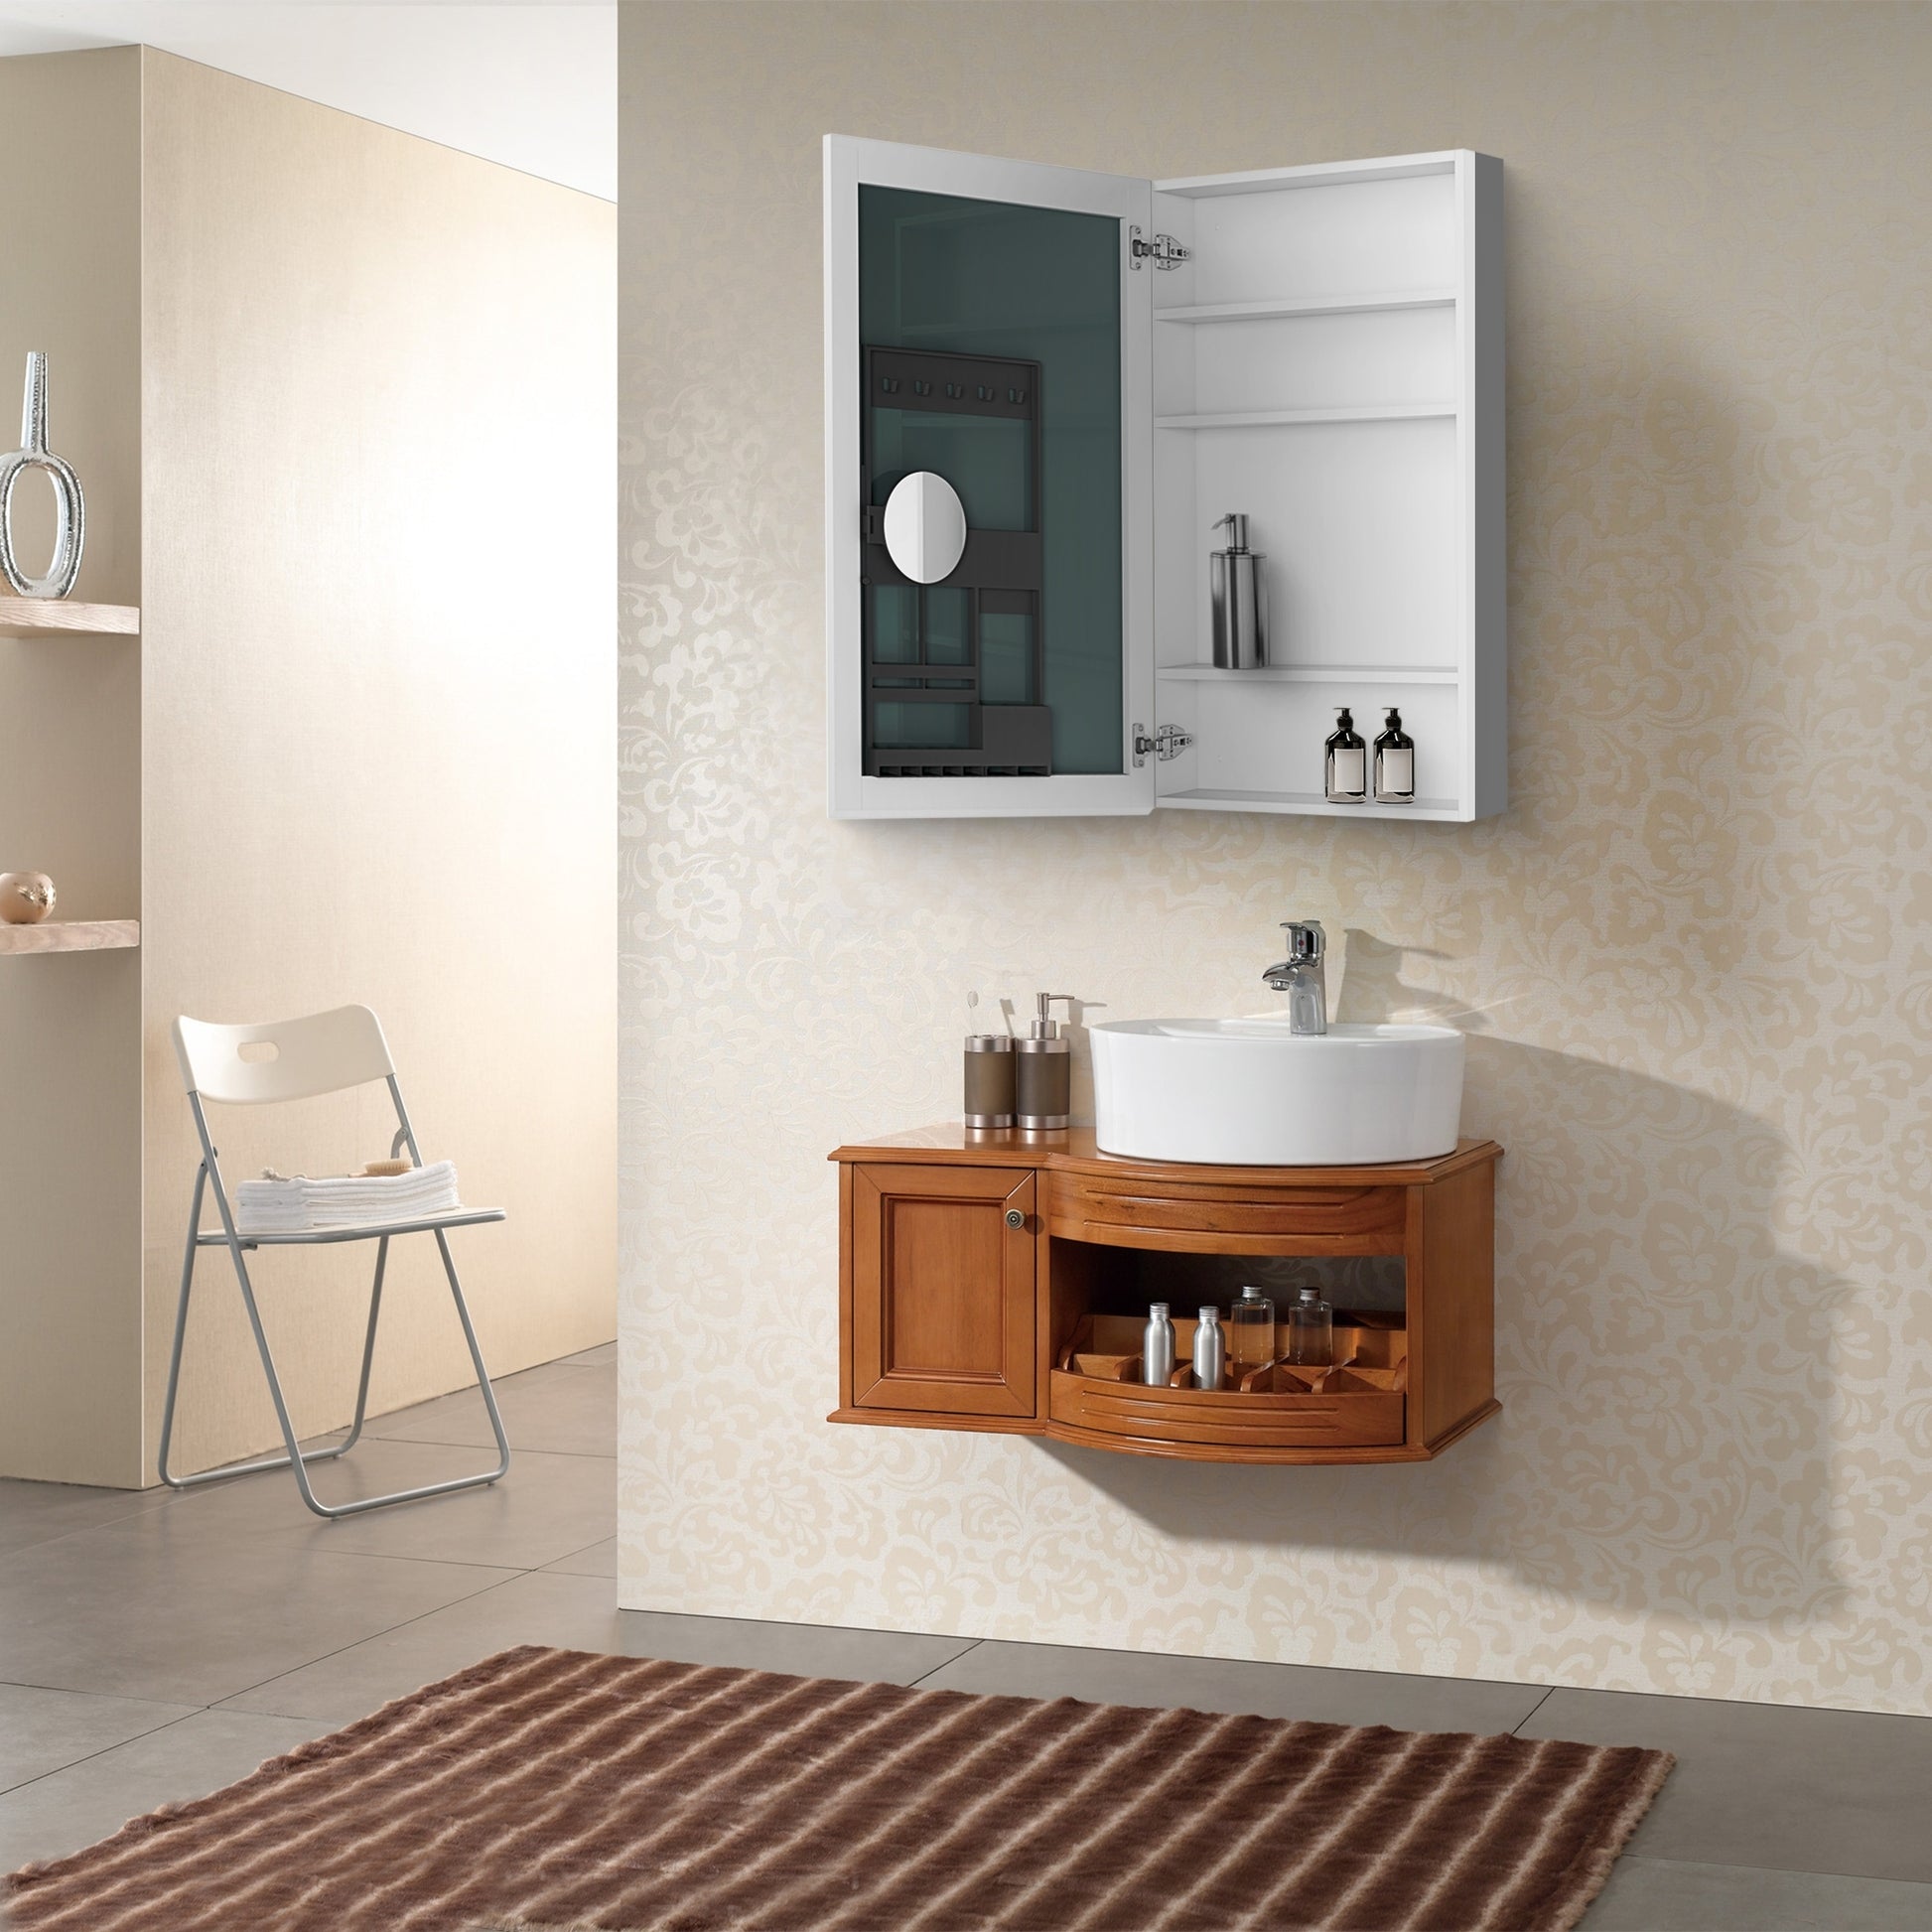 24" W x 36" H Single Door Bathroom Medicine Cabinet white-engineered wood